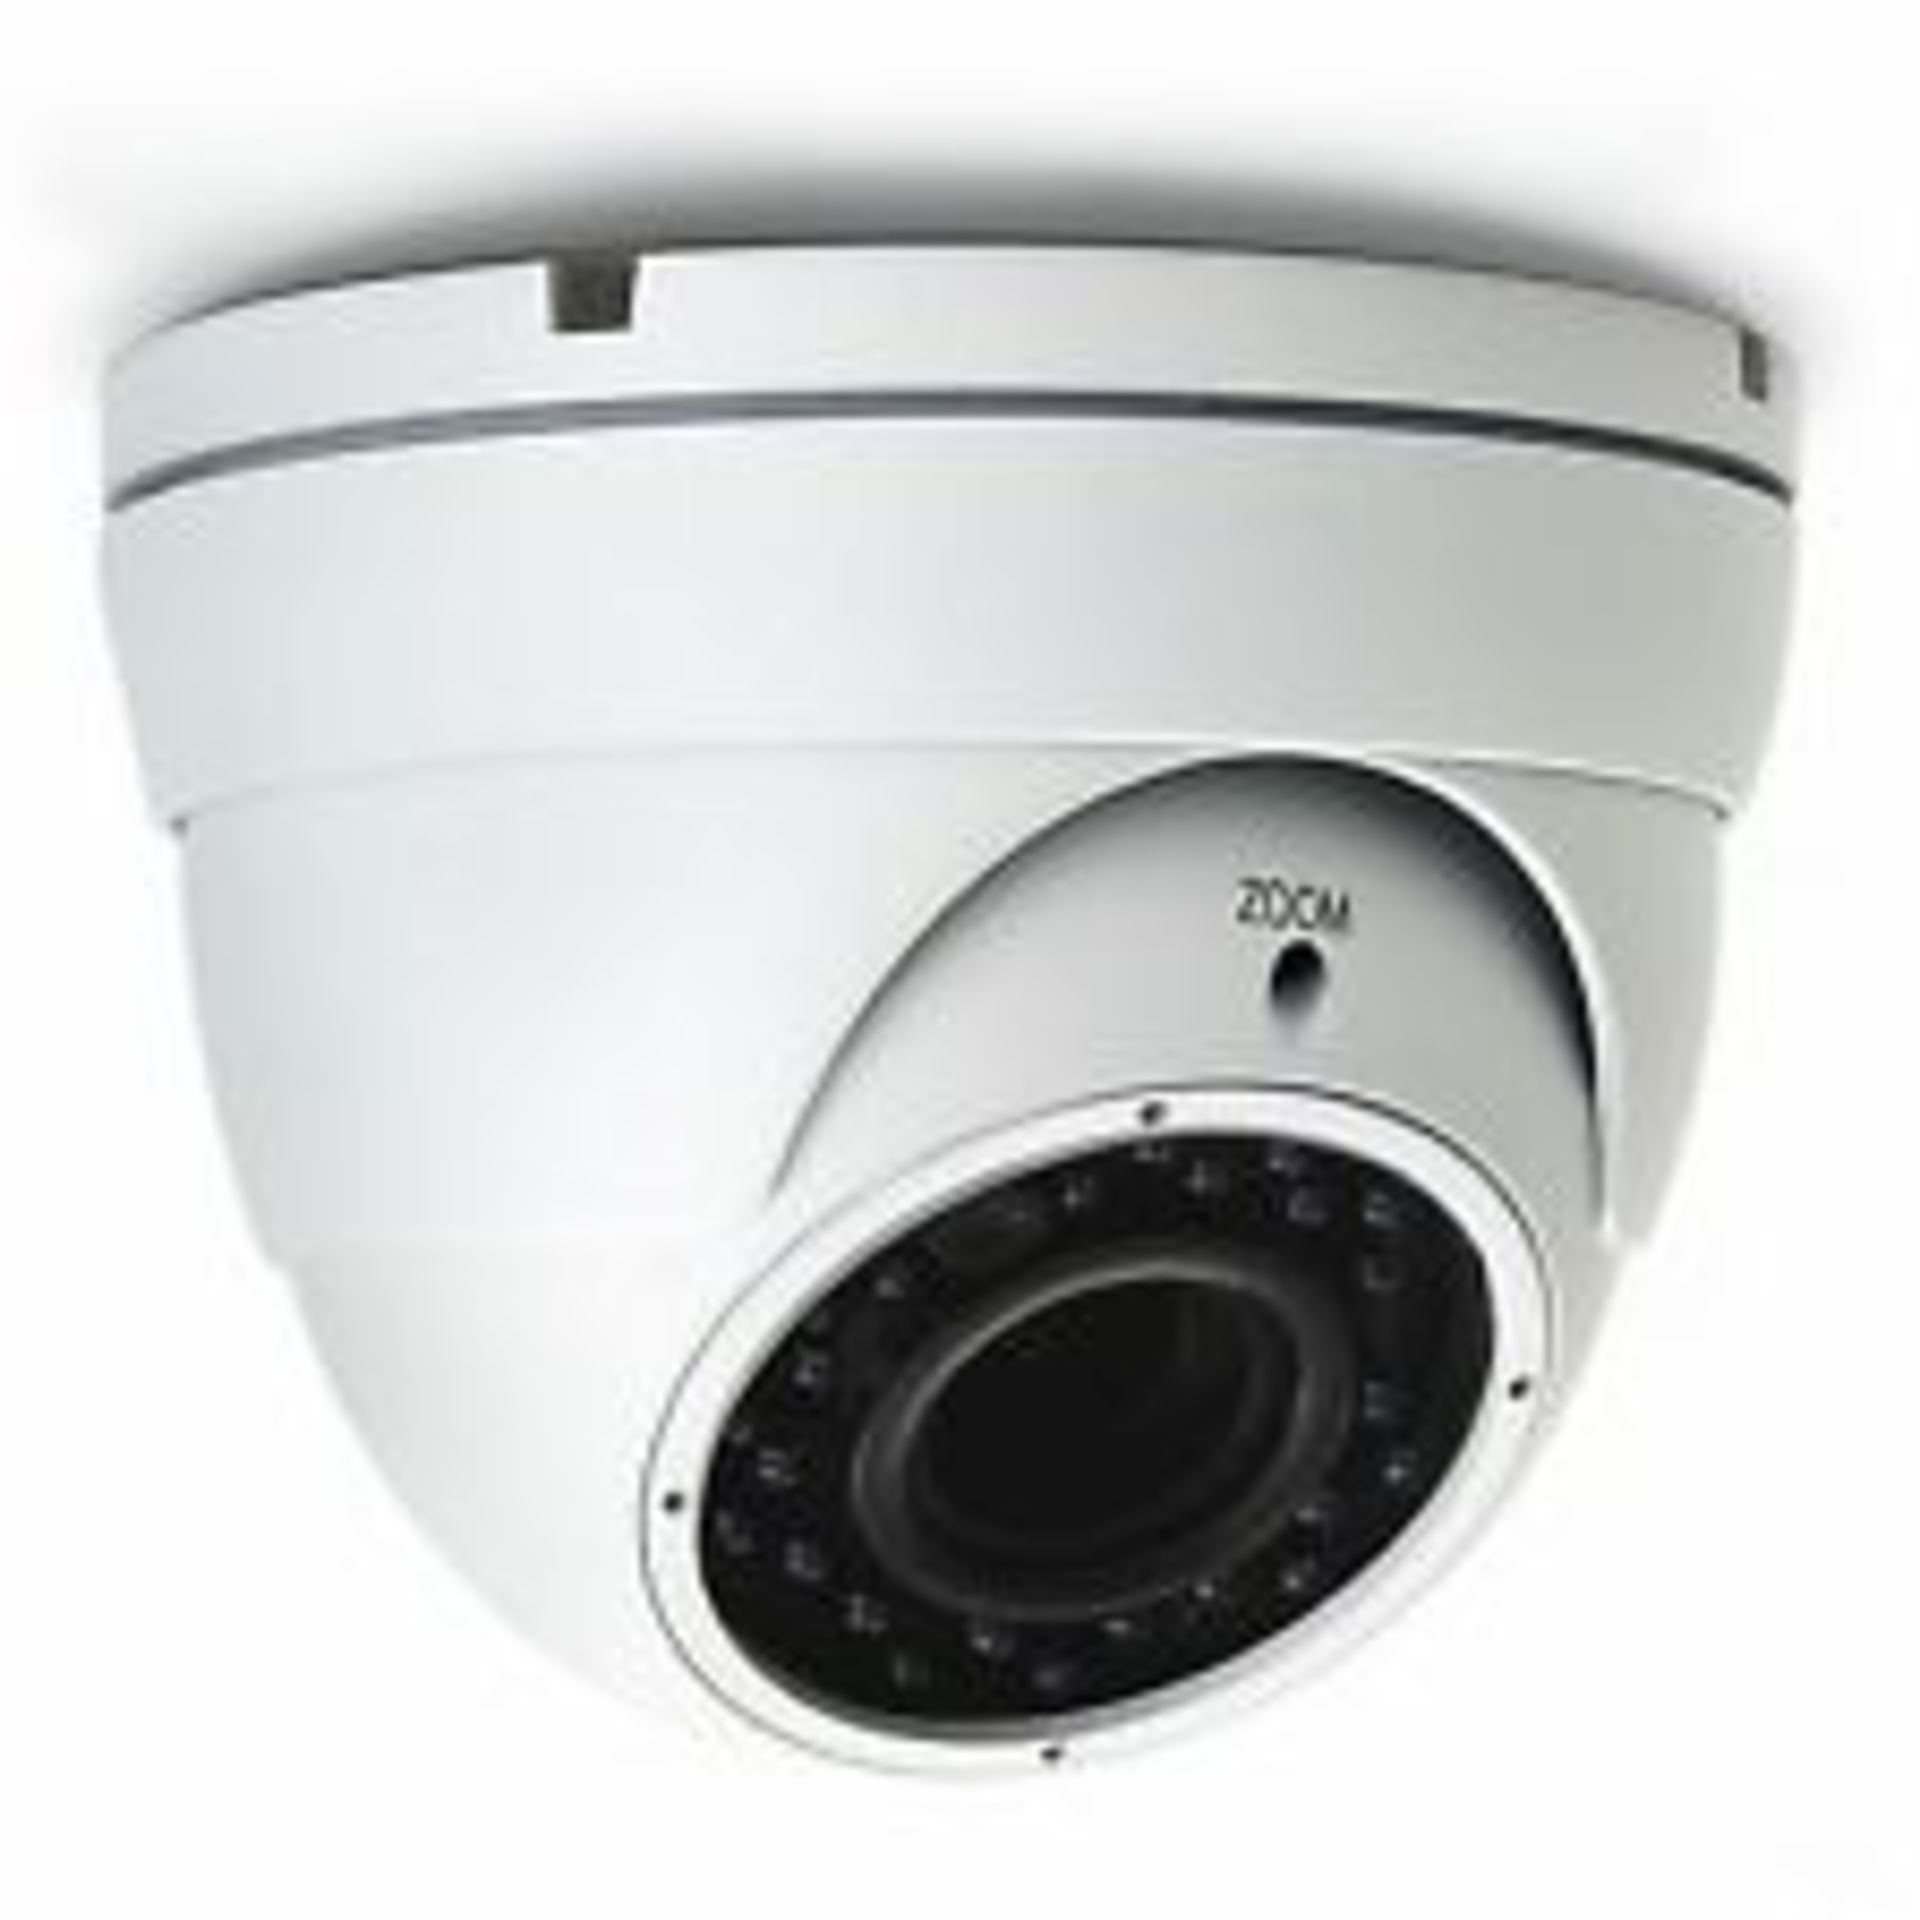 V *TRADE QTY* Brand New Avtech 540TVL Eyeball IR Dome Camera - 1/3" Sony CCD IP65 -White X 6 YOUR